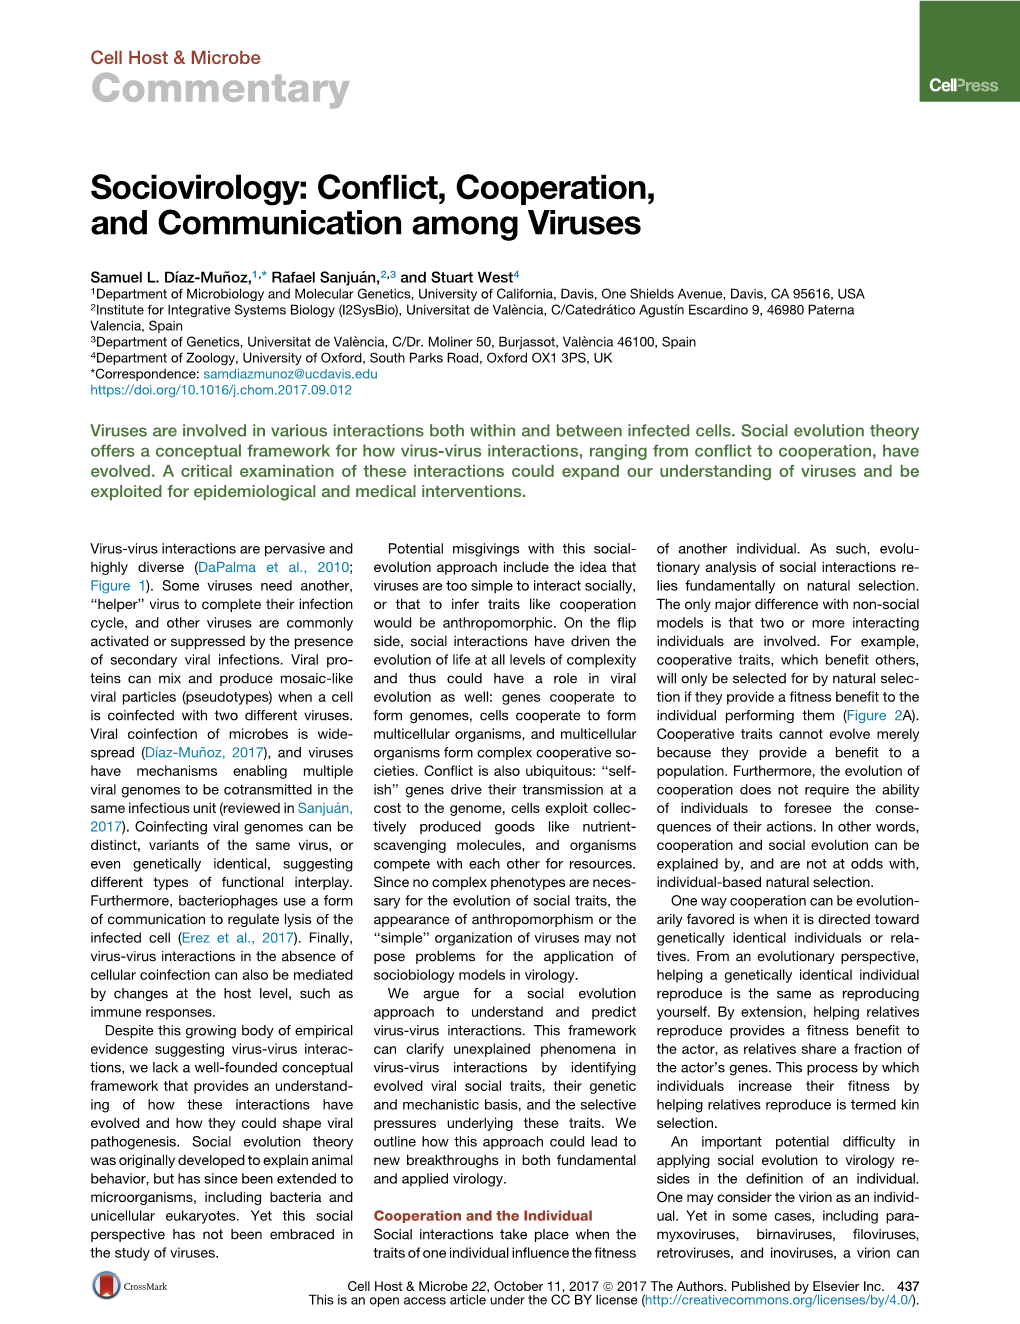 Sociovirology: Conflict, Cooperation, and Communication Among Viruses